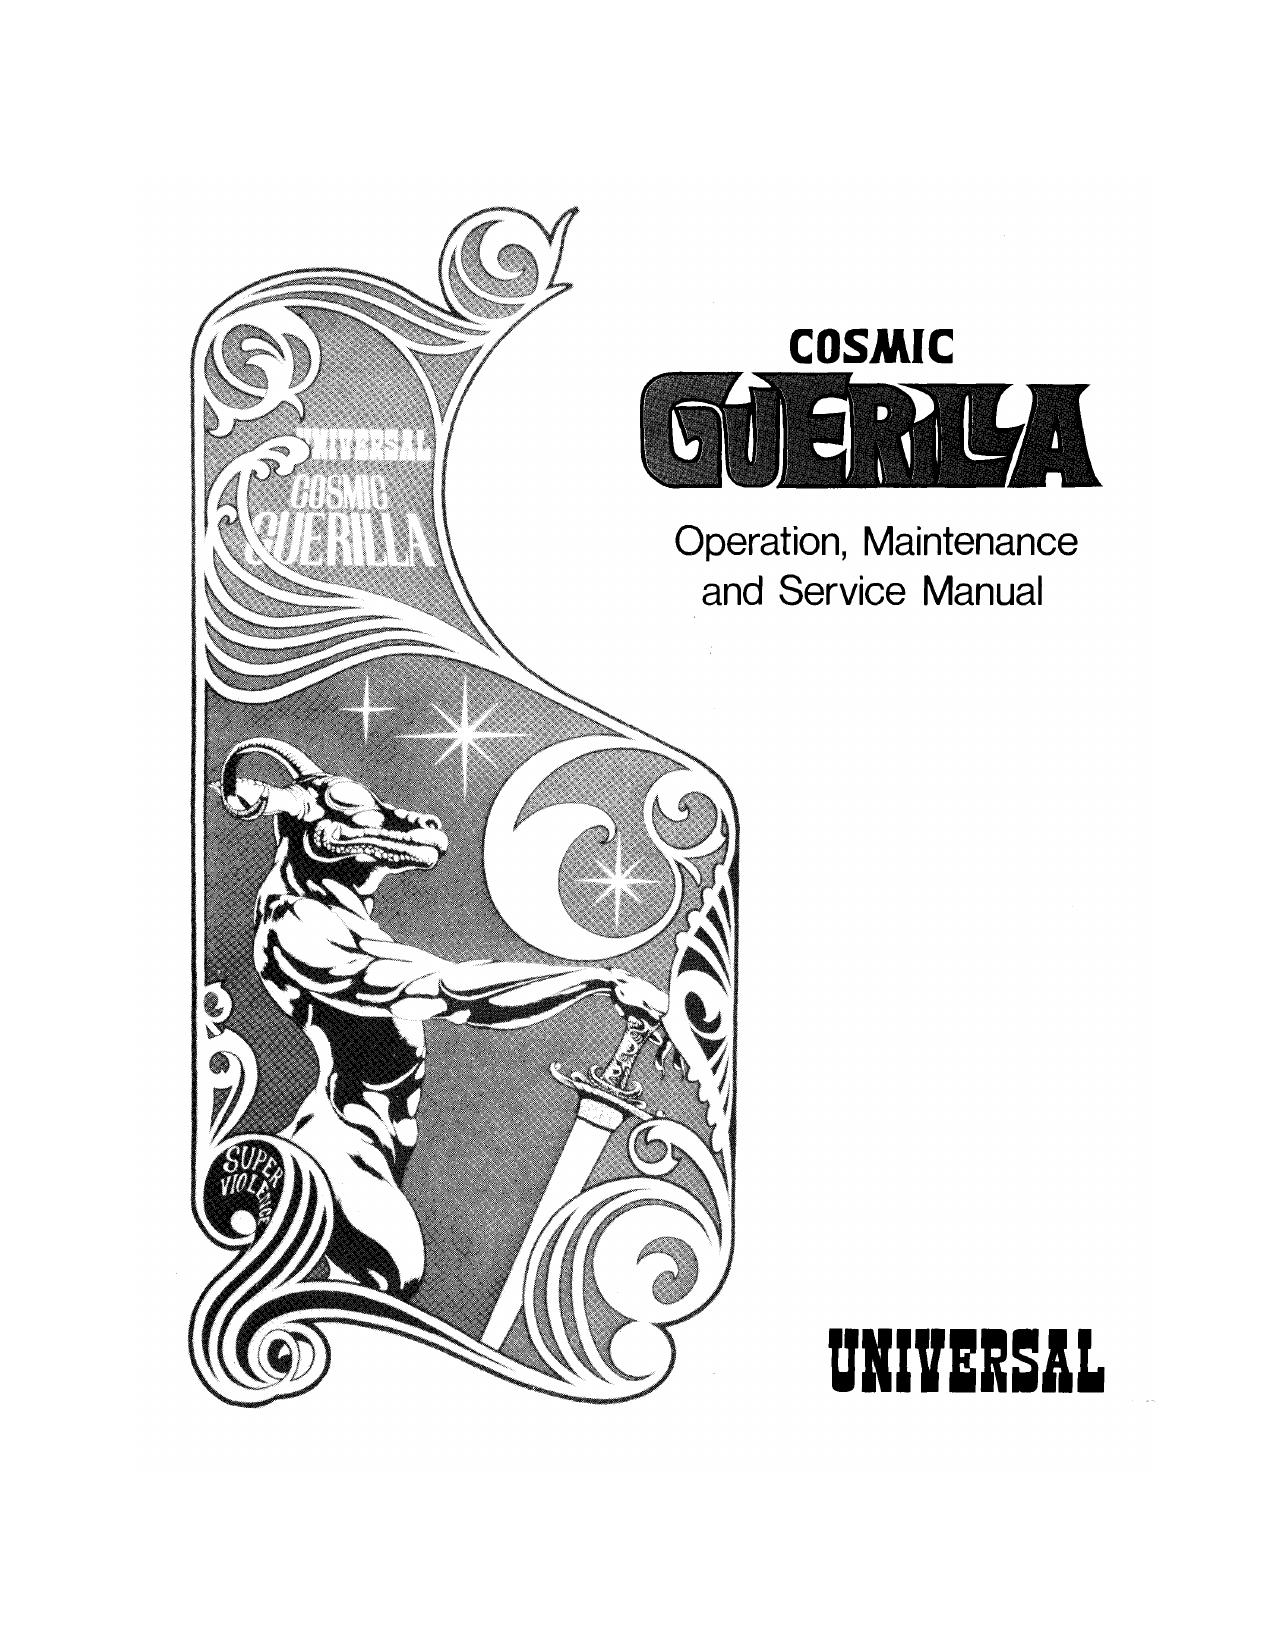 CosmicGuerilla Manual